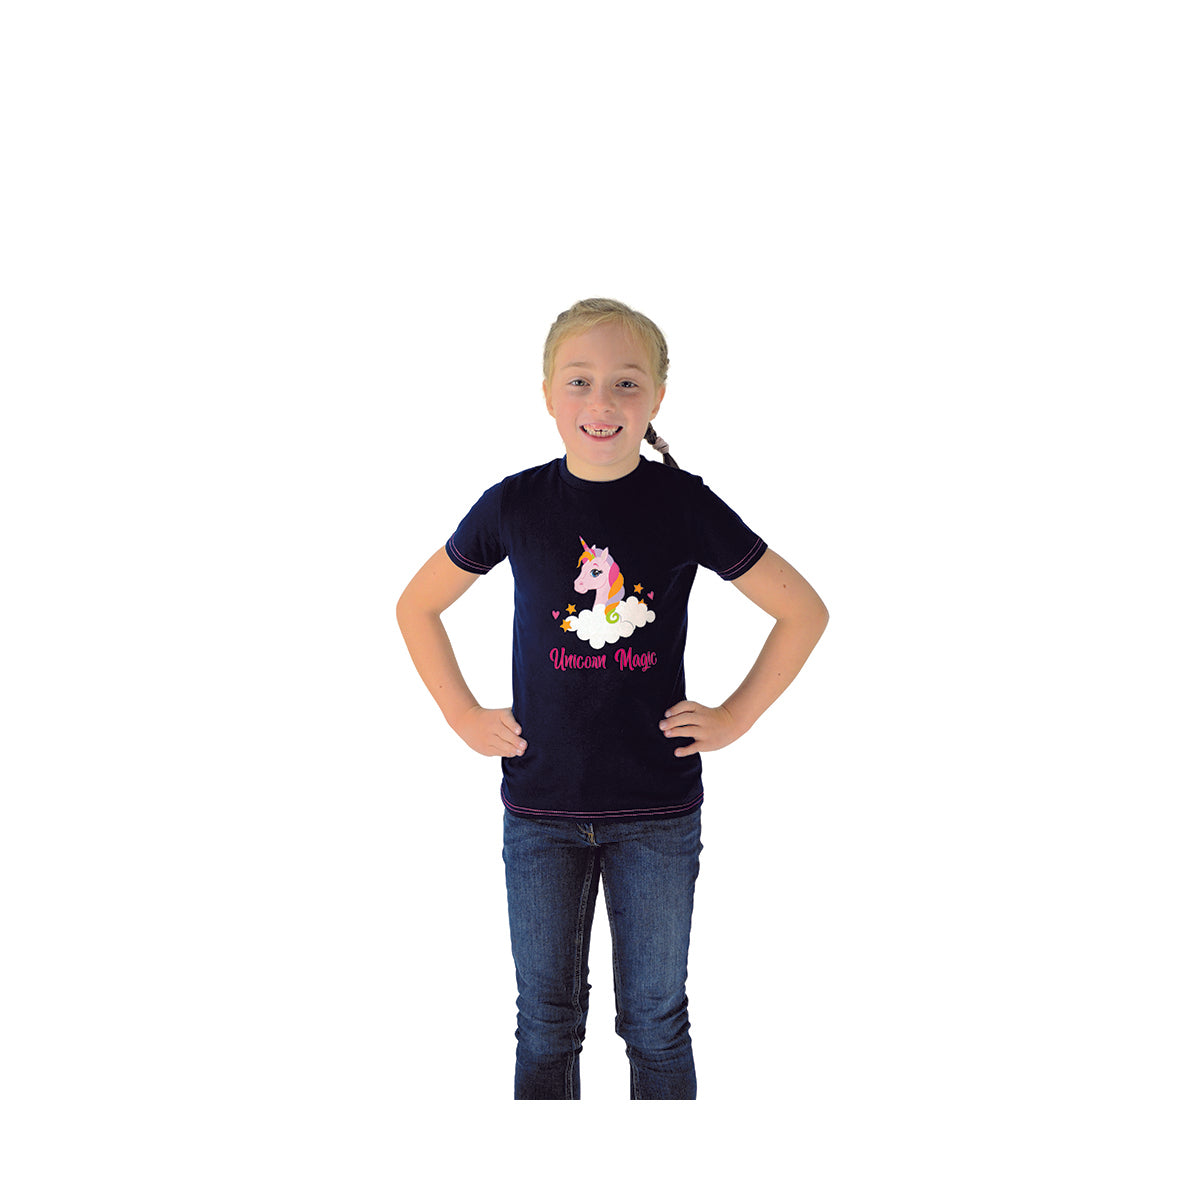 Unicorn Magic T-Shirt by Little Rider